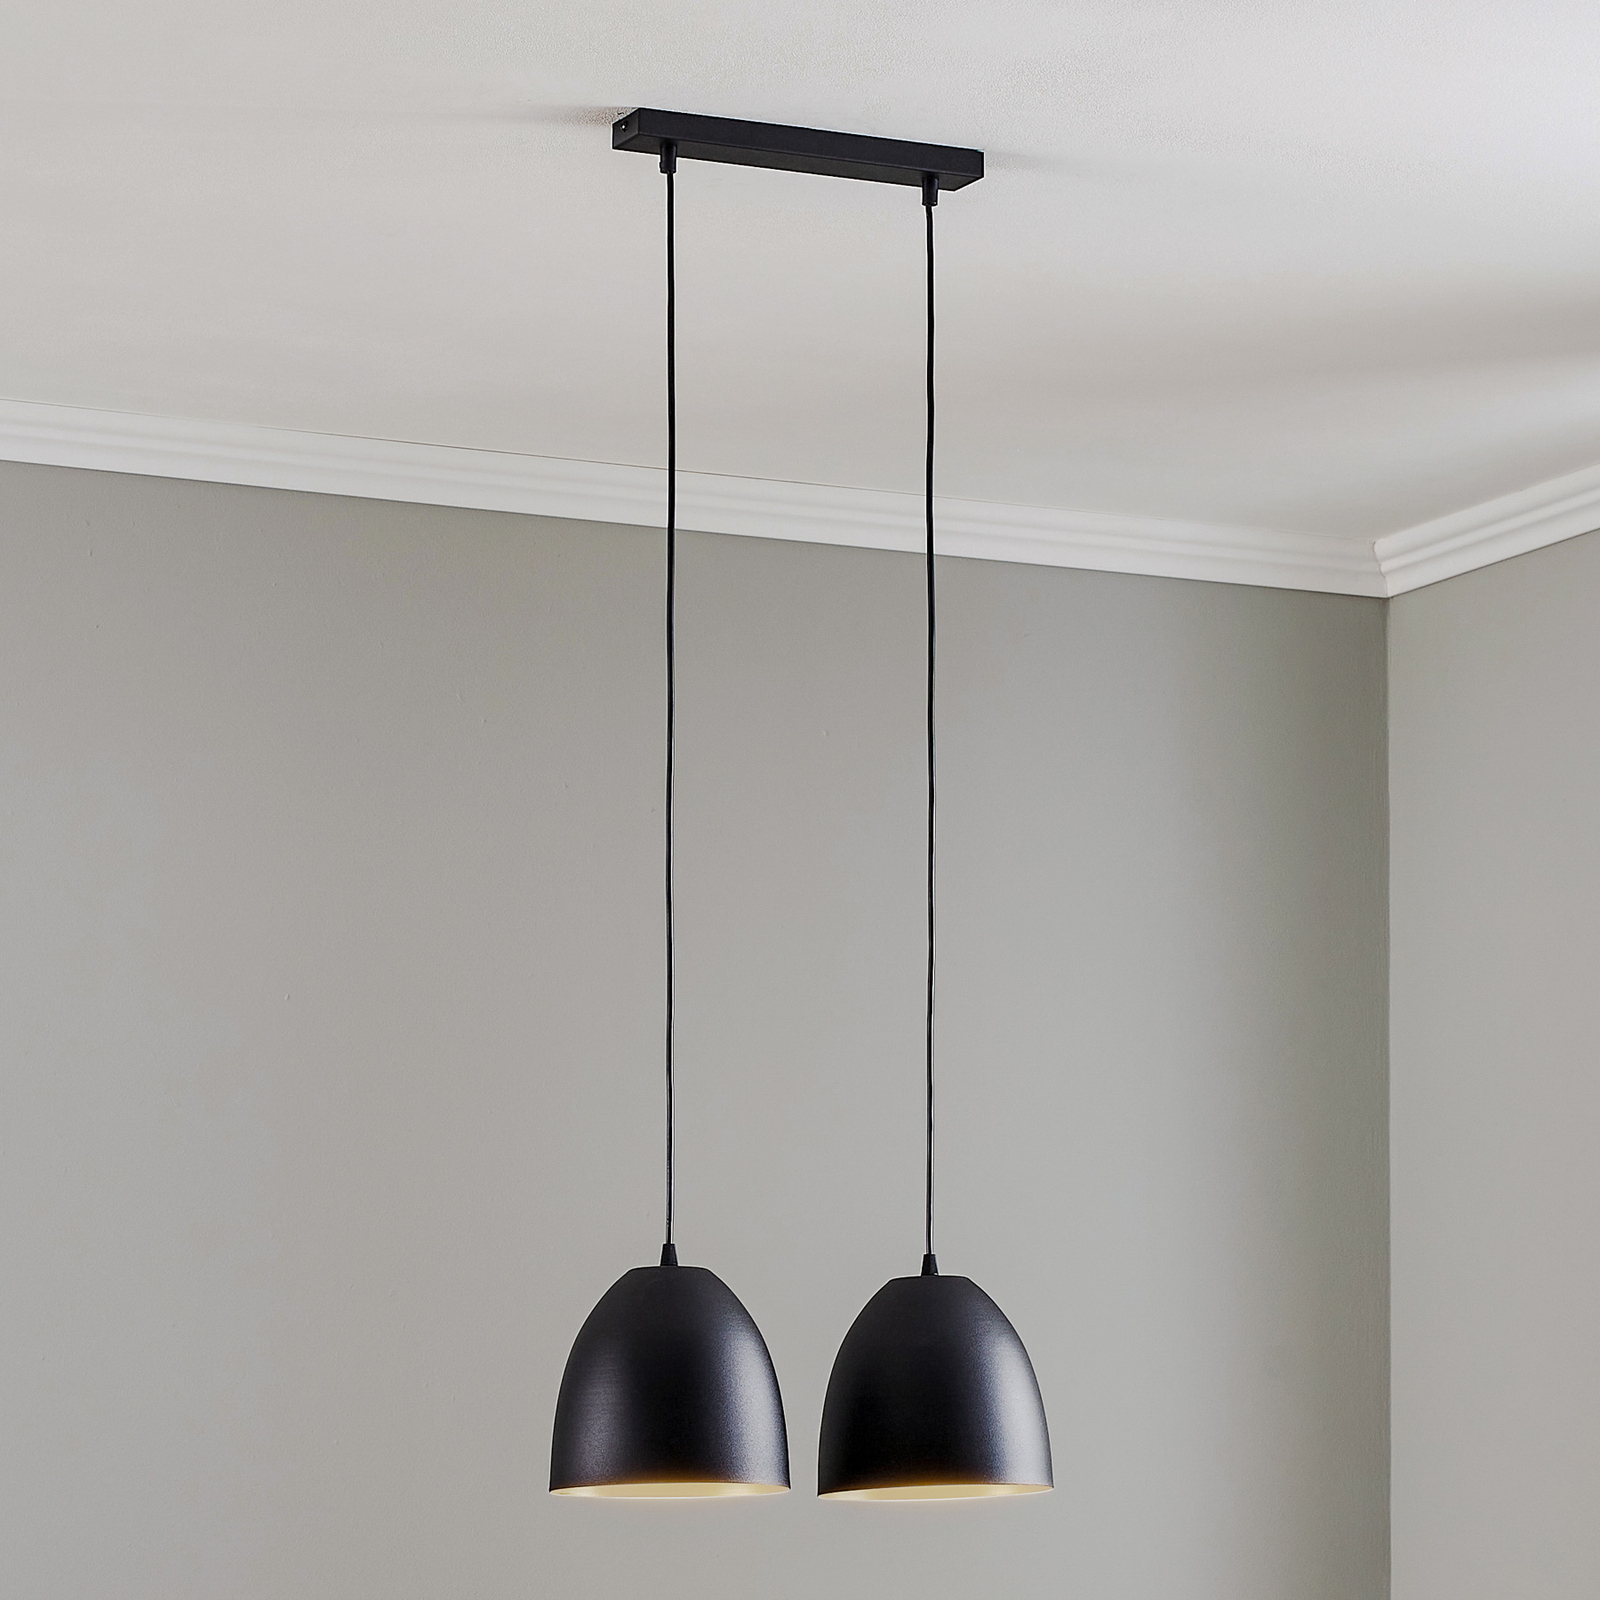 Lenox hanging light, two-bulb, black/gold